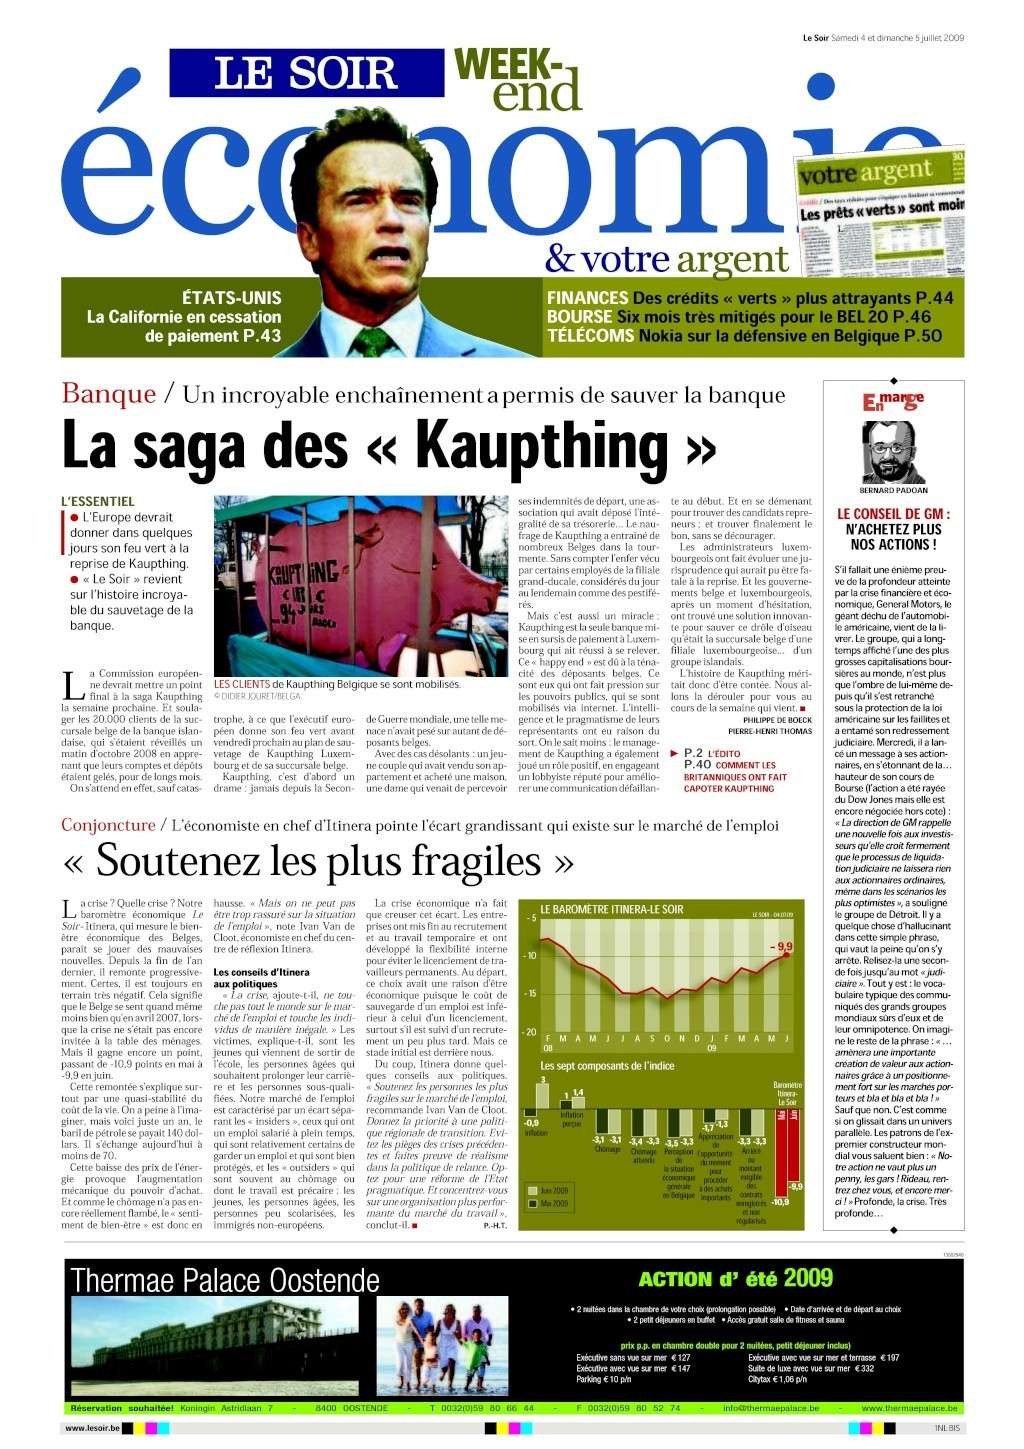 04/07/2009 Le Soir - La saga des "Kaupthing" Saga_l13